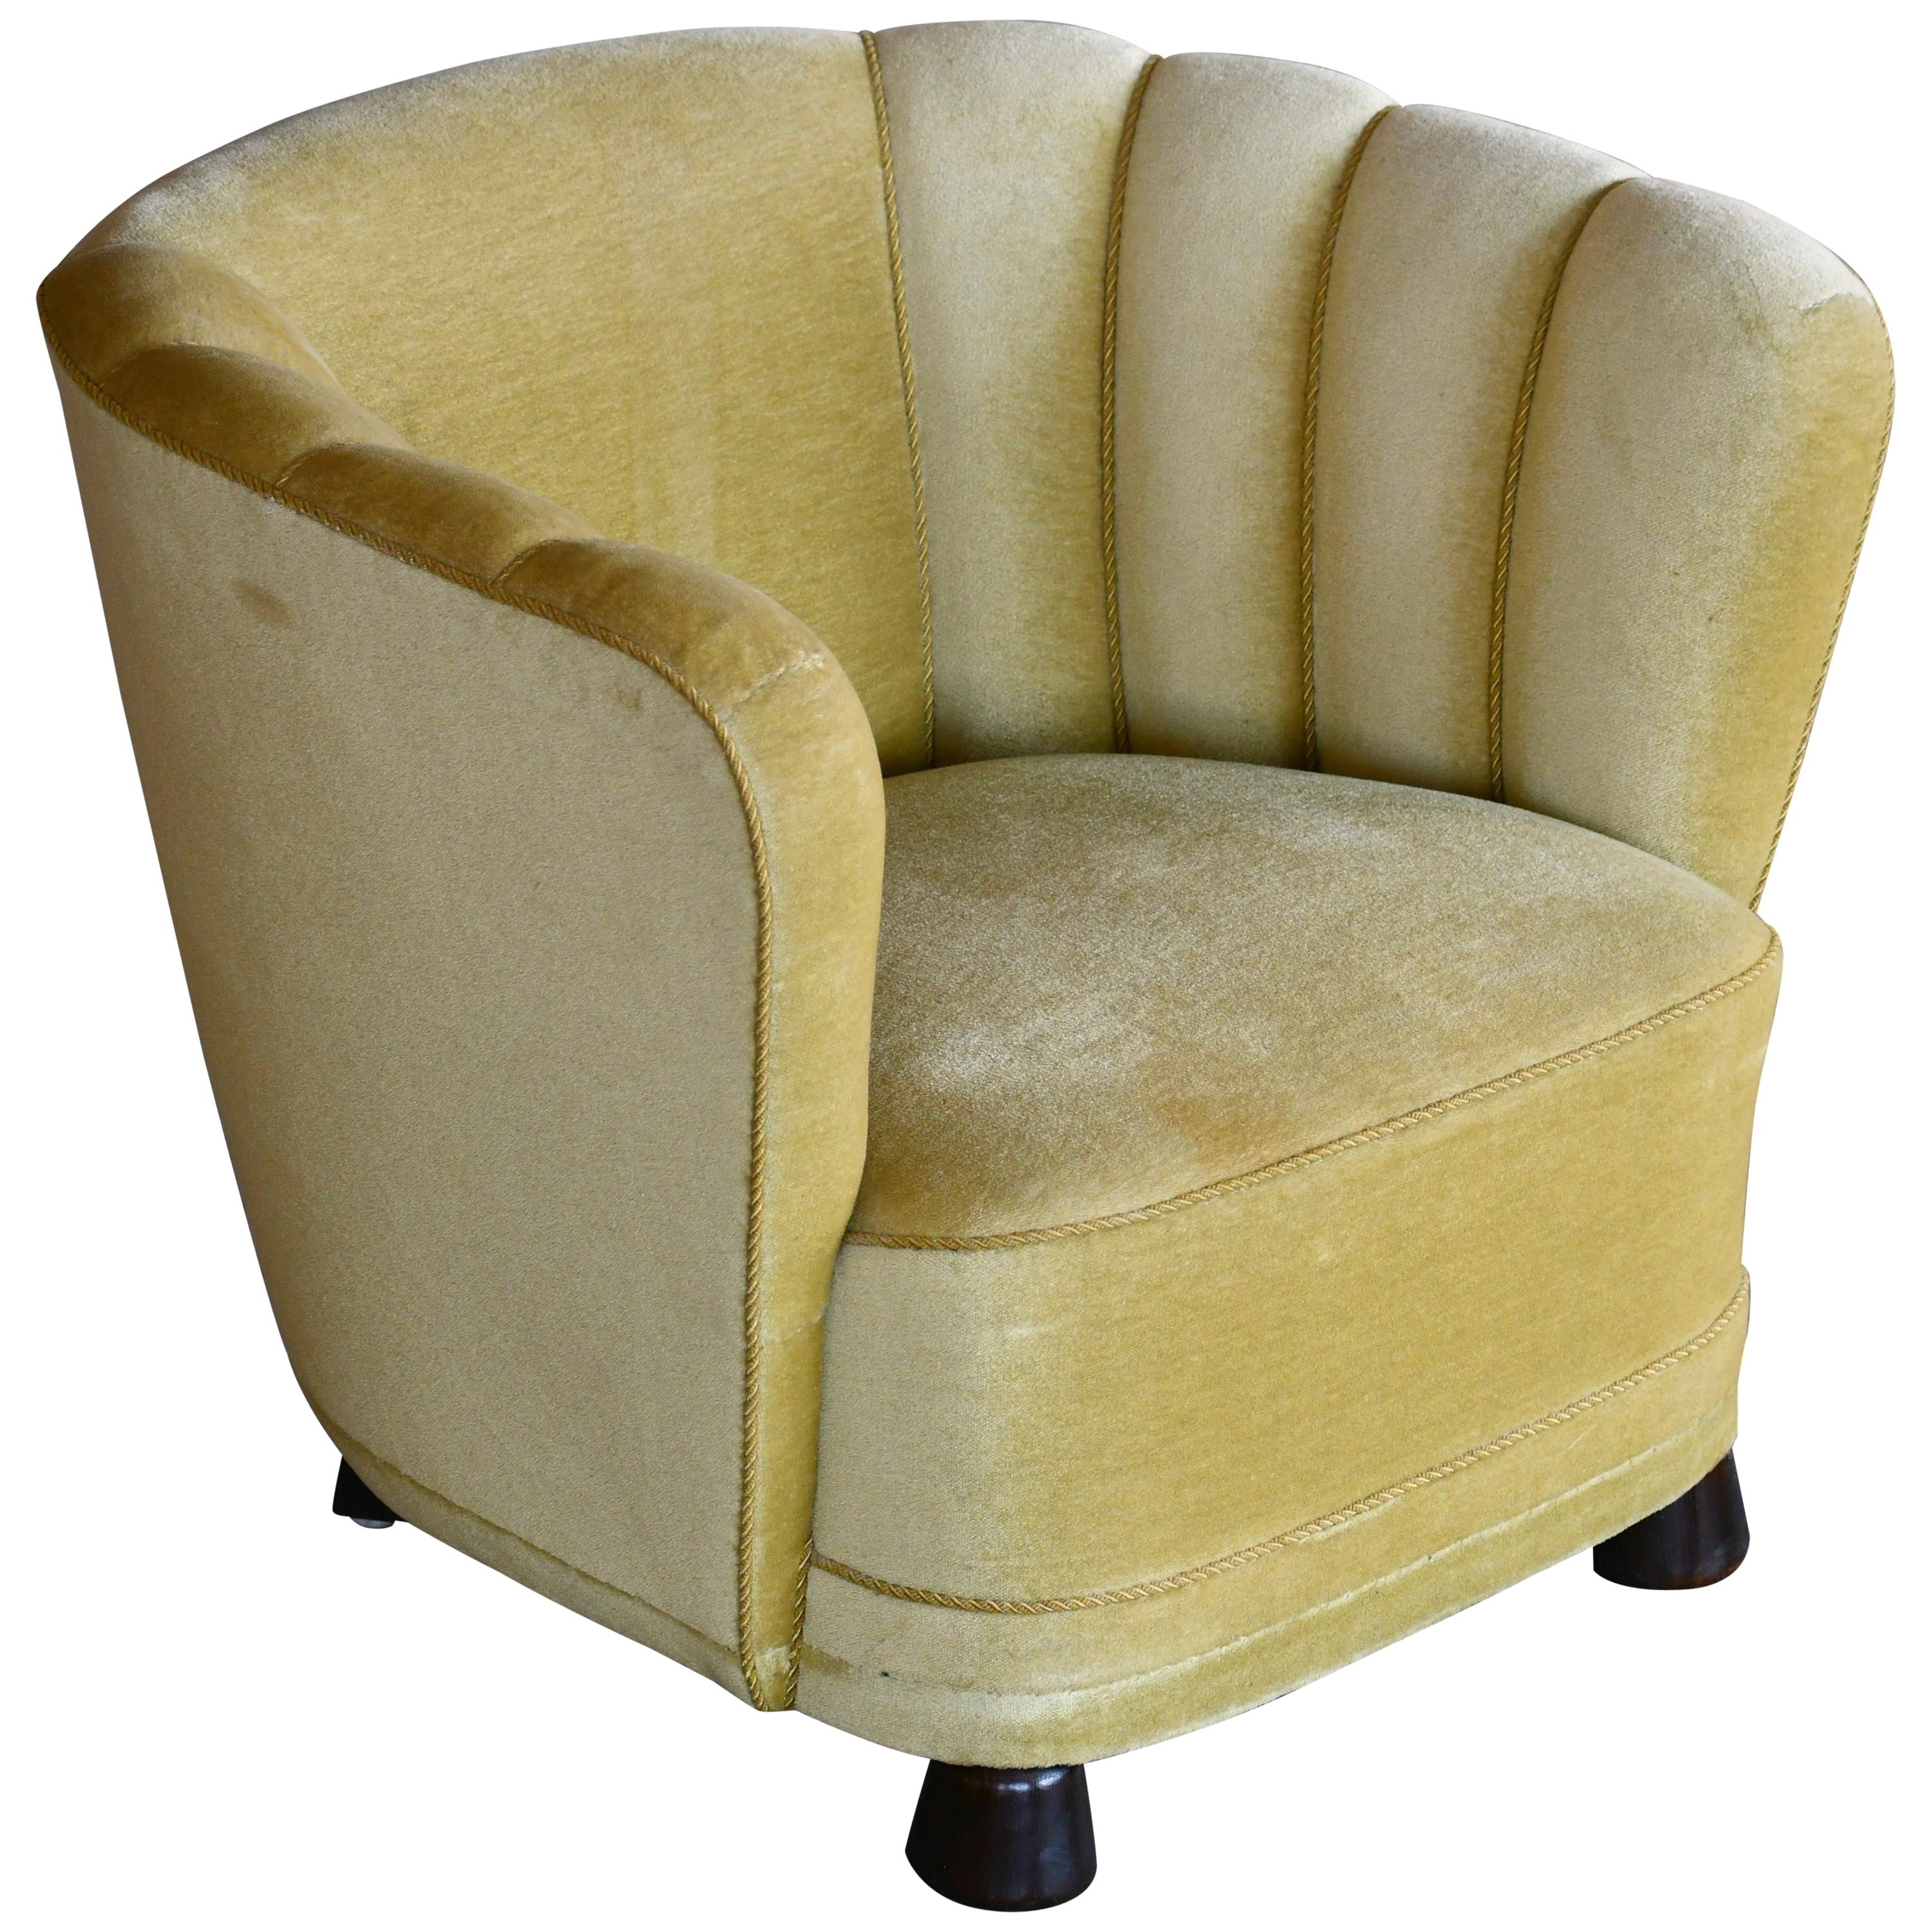 Danish 1940s Boesen Banana Style Curved Tub Club Chair